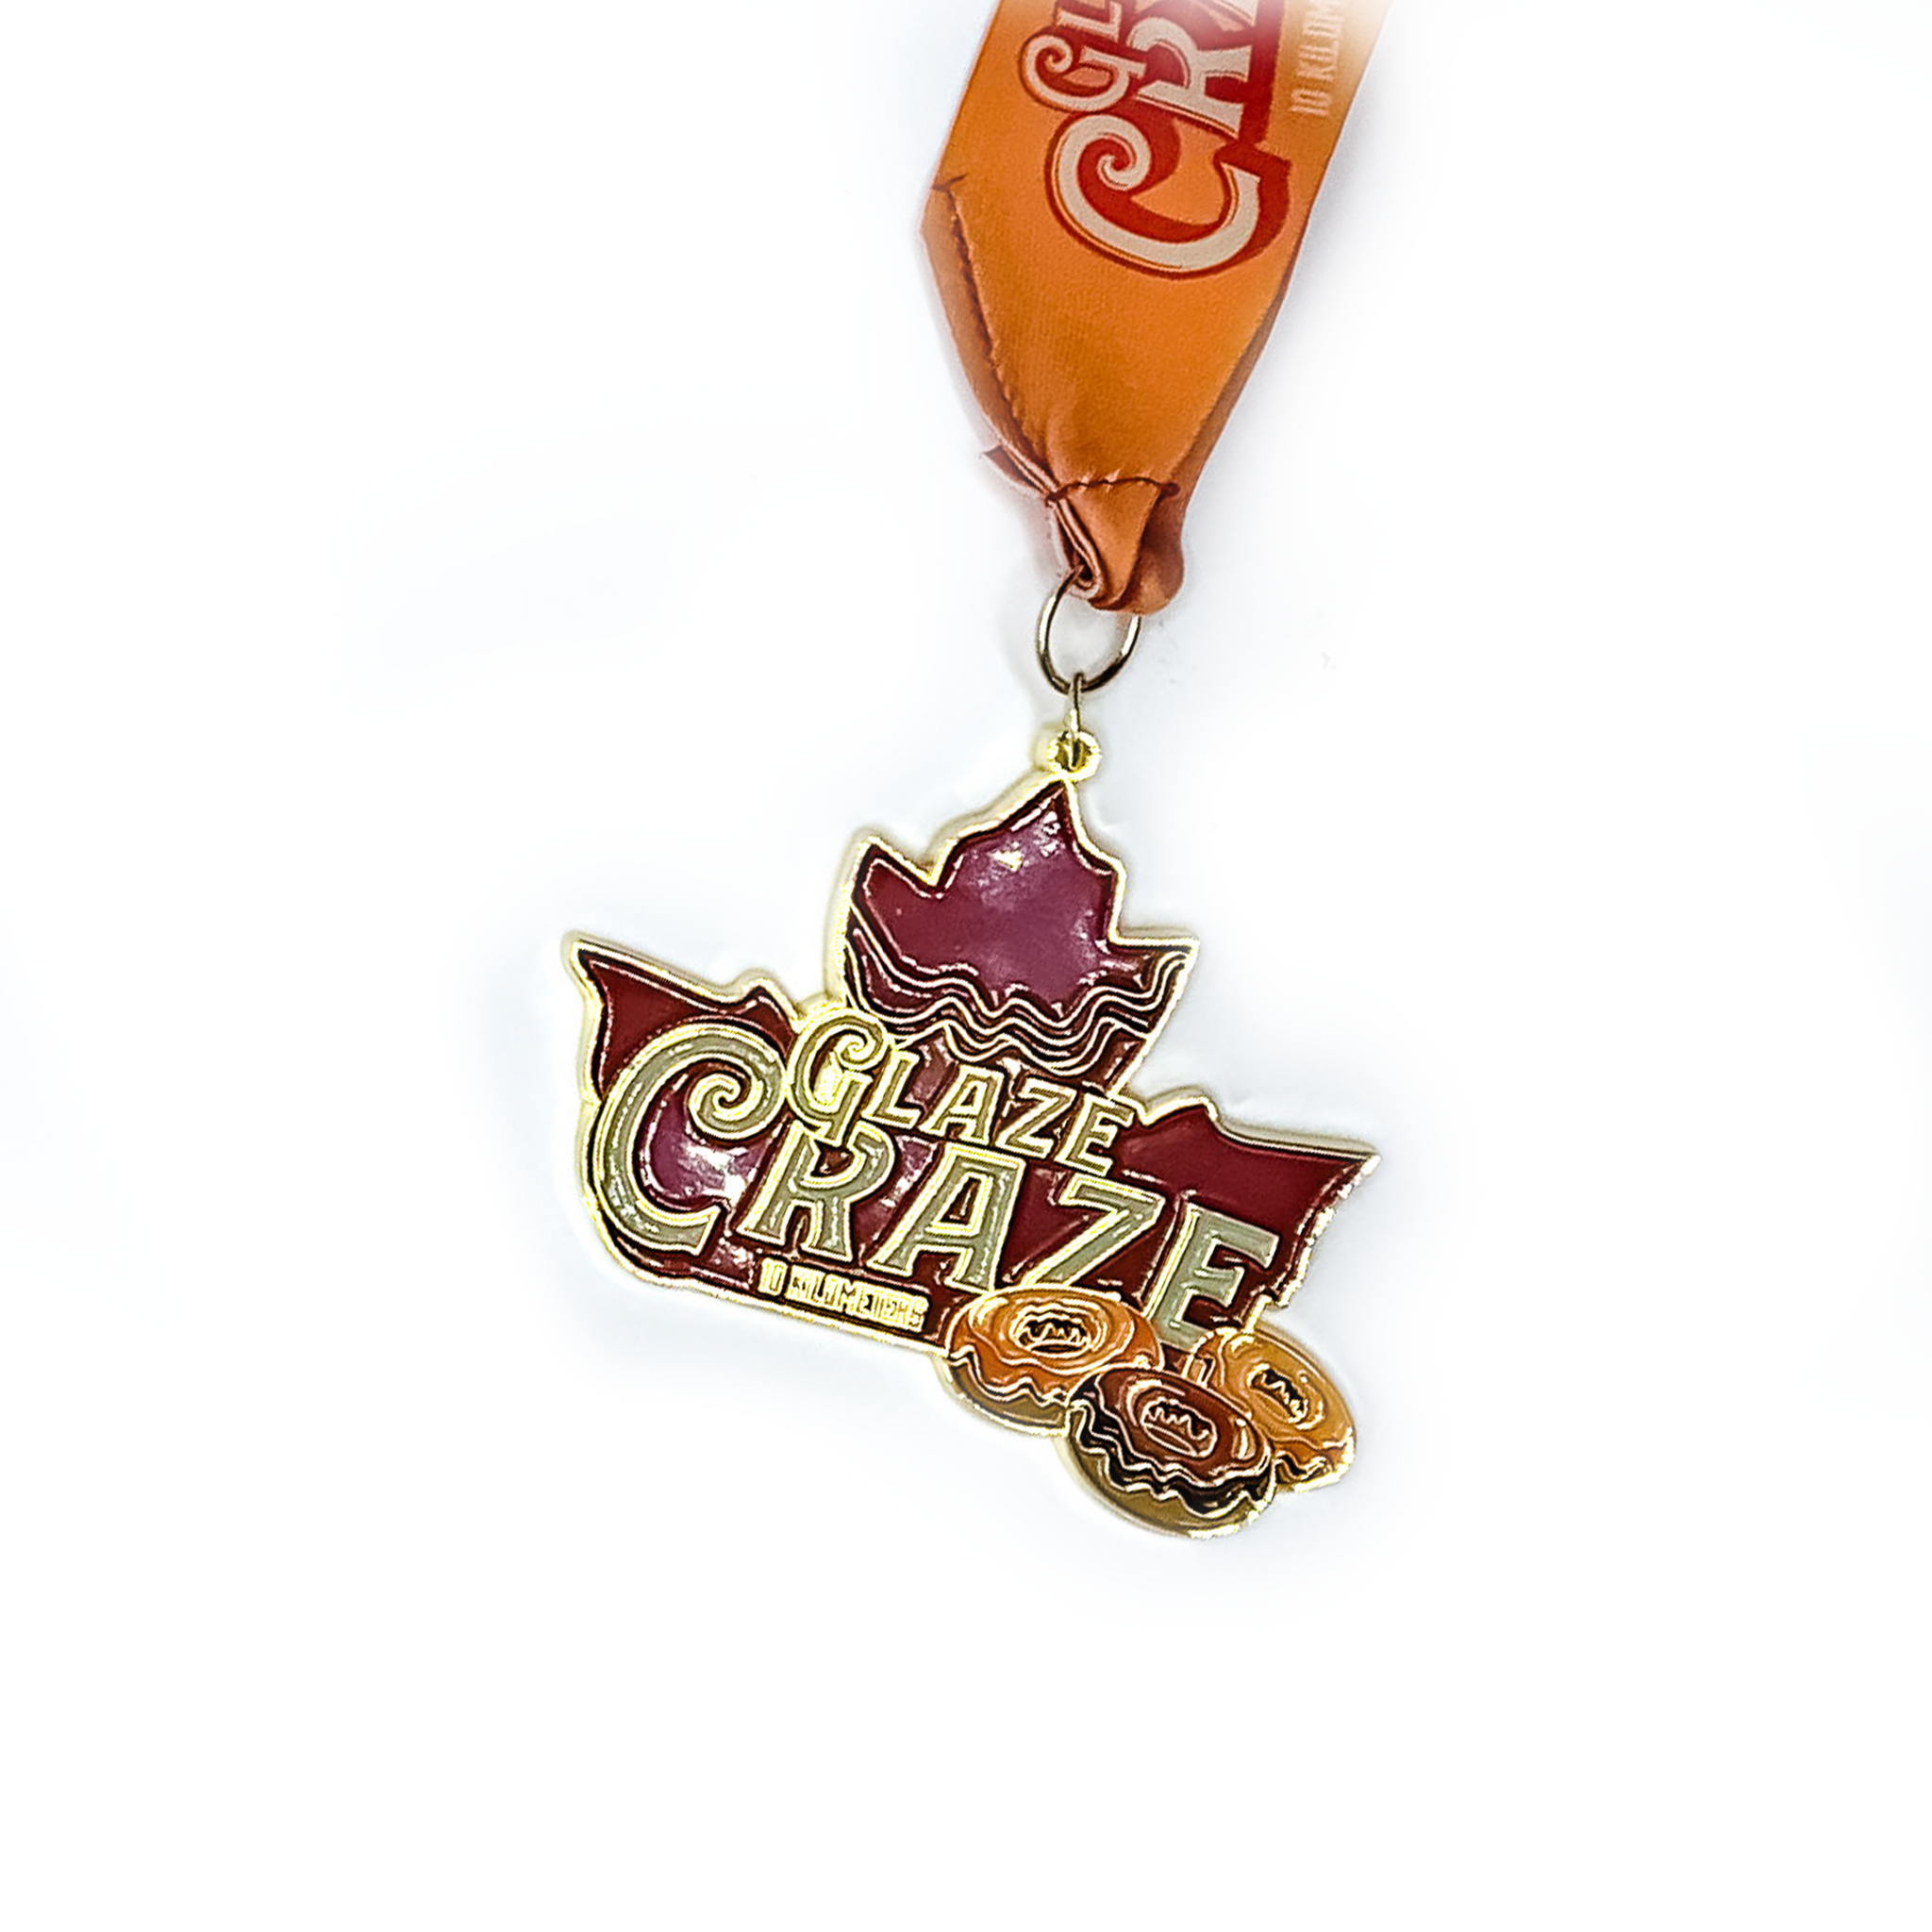 Glaze Craze 10k  - Entry + Medal